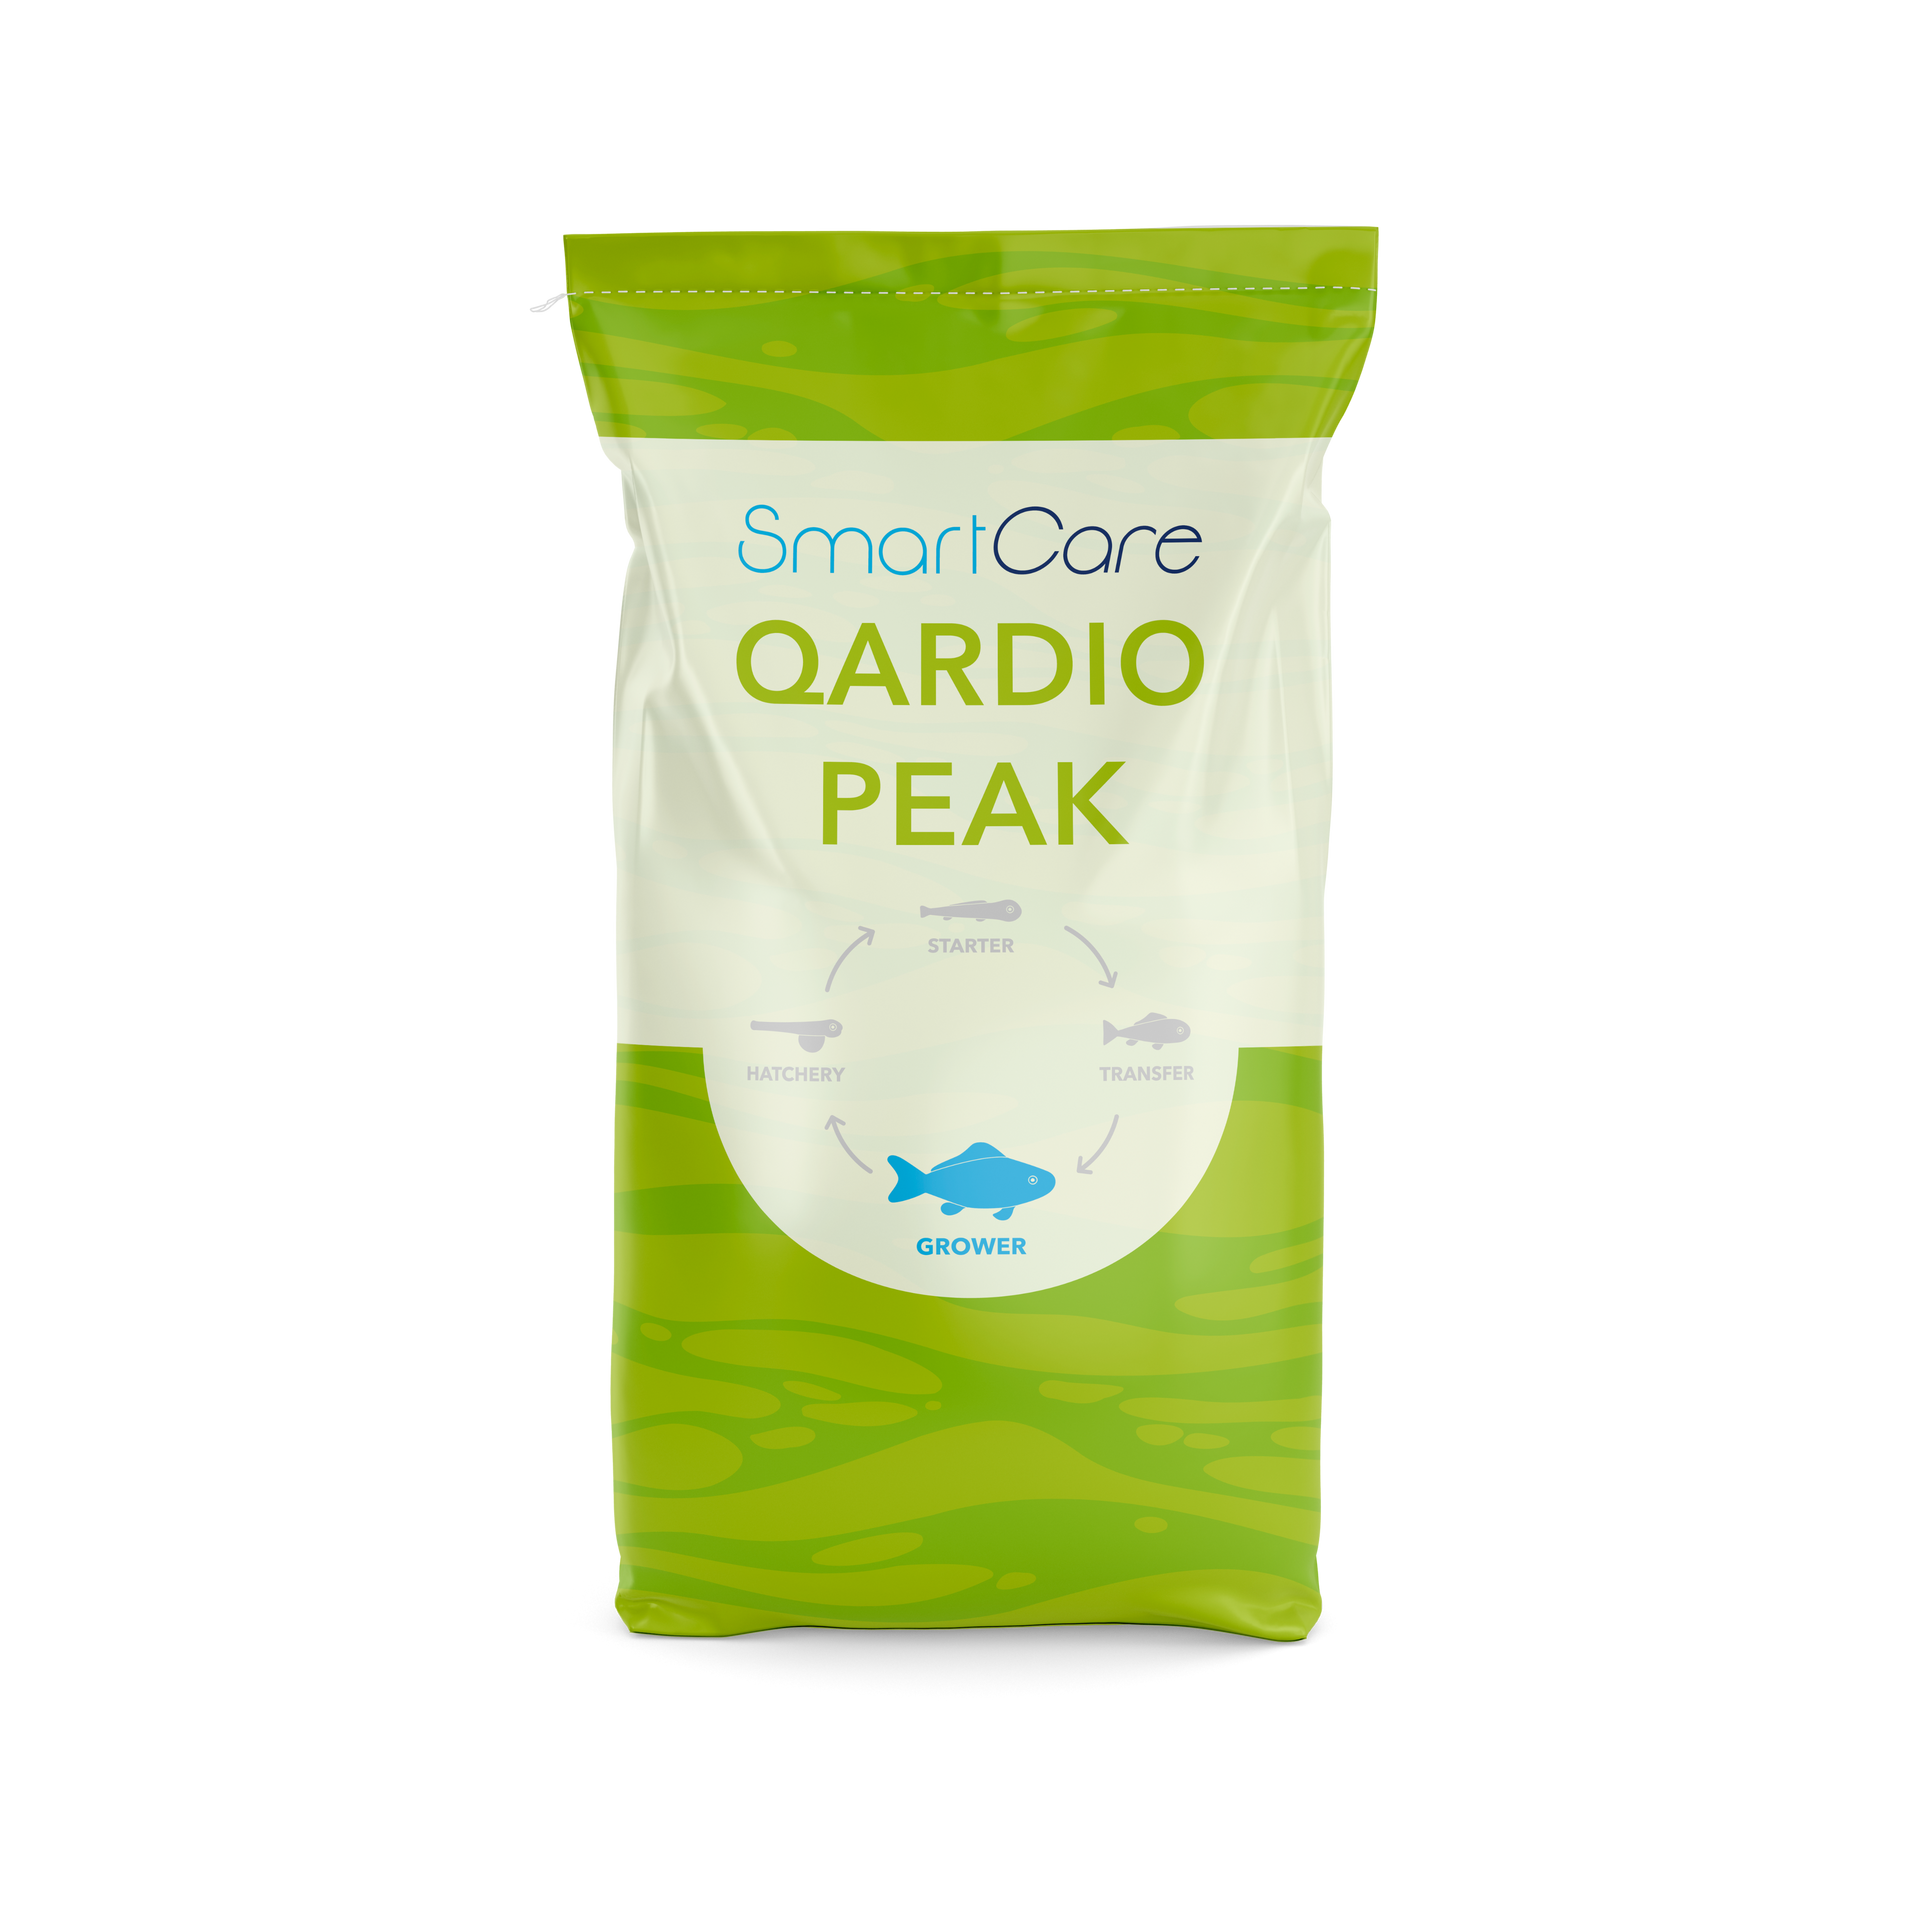 SmartCare Qardio Peak health feed for atlantic salmon